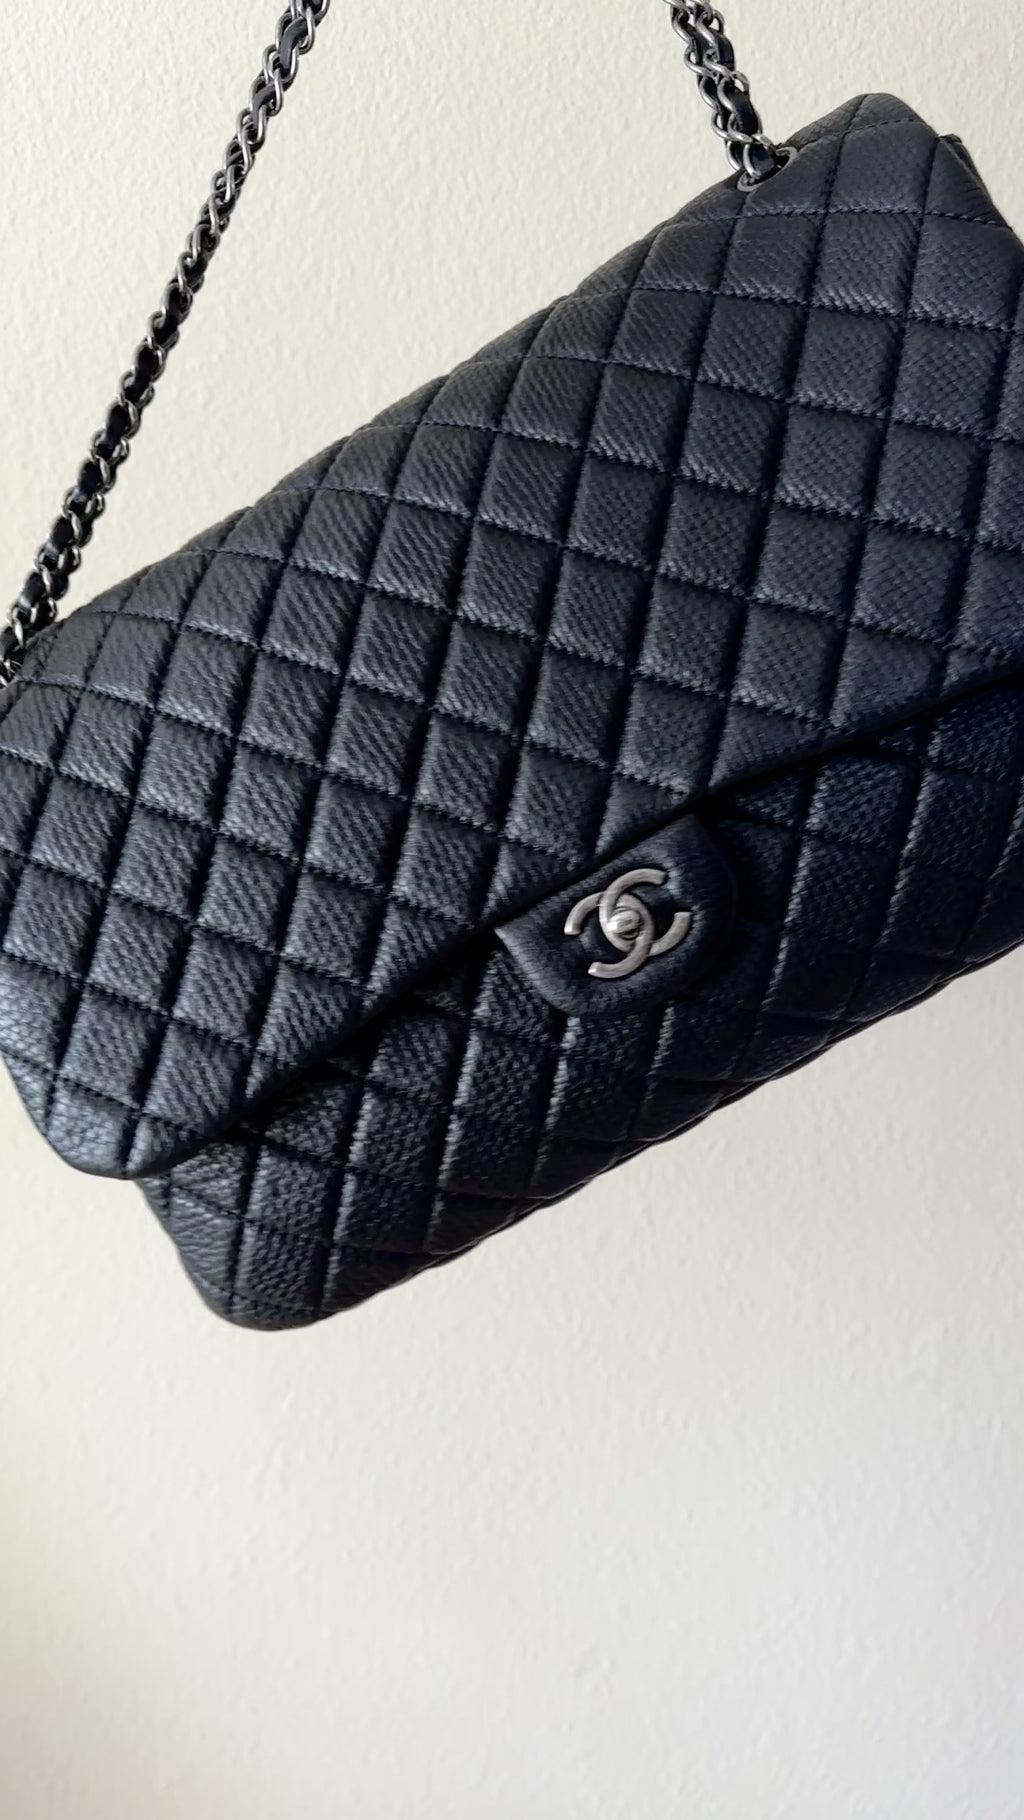 Chanel Jumbo Classic Double Flap Bag Black Caviar Silver Hardware